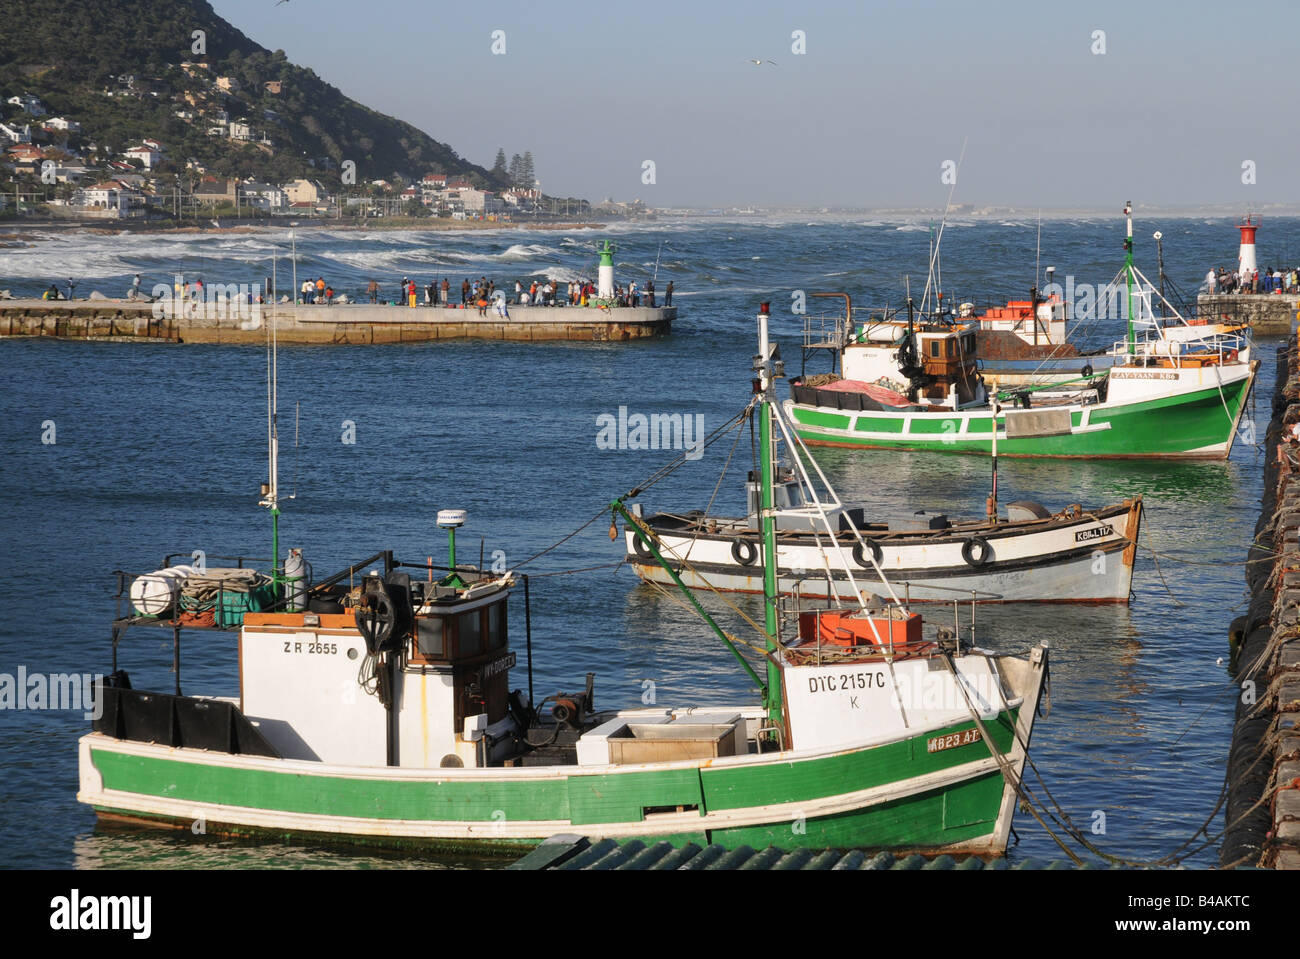 https://c8.alamy.com/comp/B4AKTC/geography-travel-south-africa-fishhoek-harbour-quay-with-fishing-boats-B4AKTC.jpg